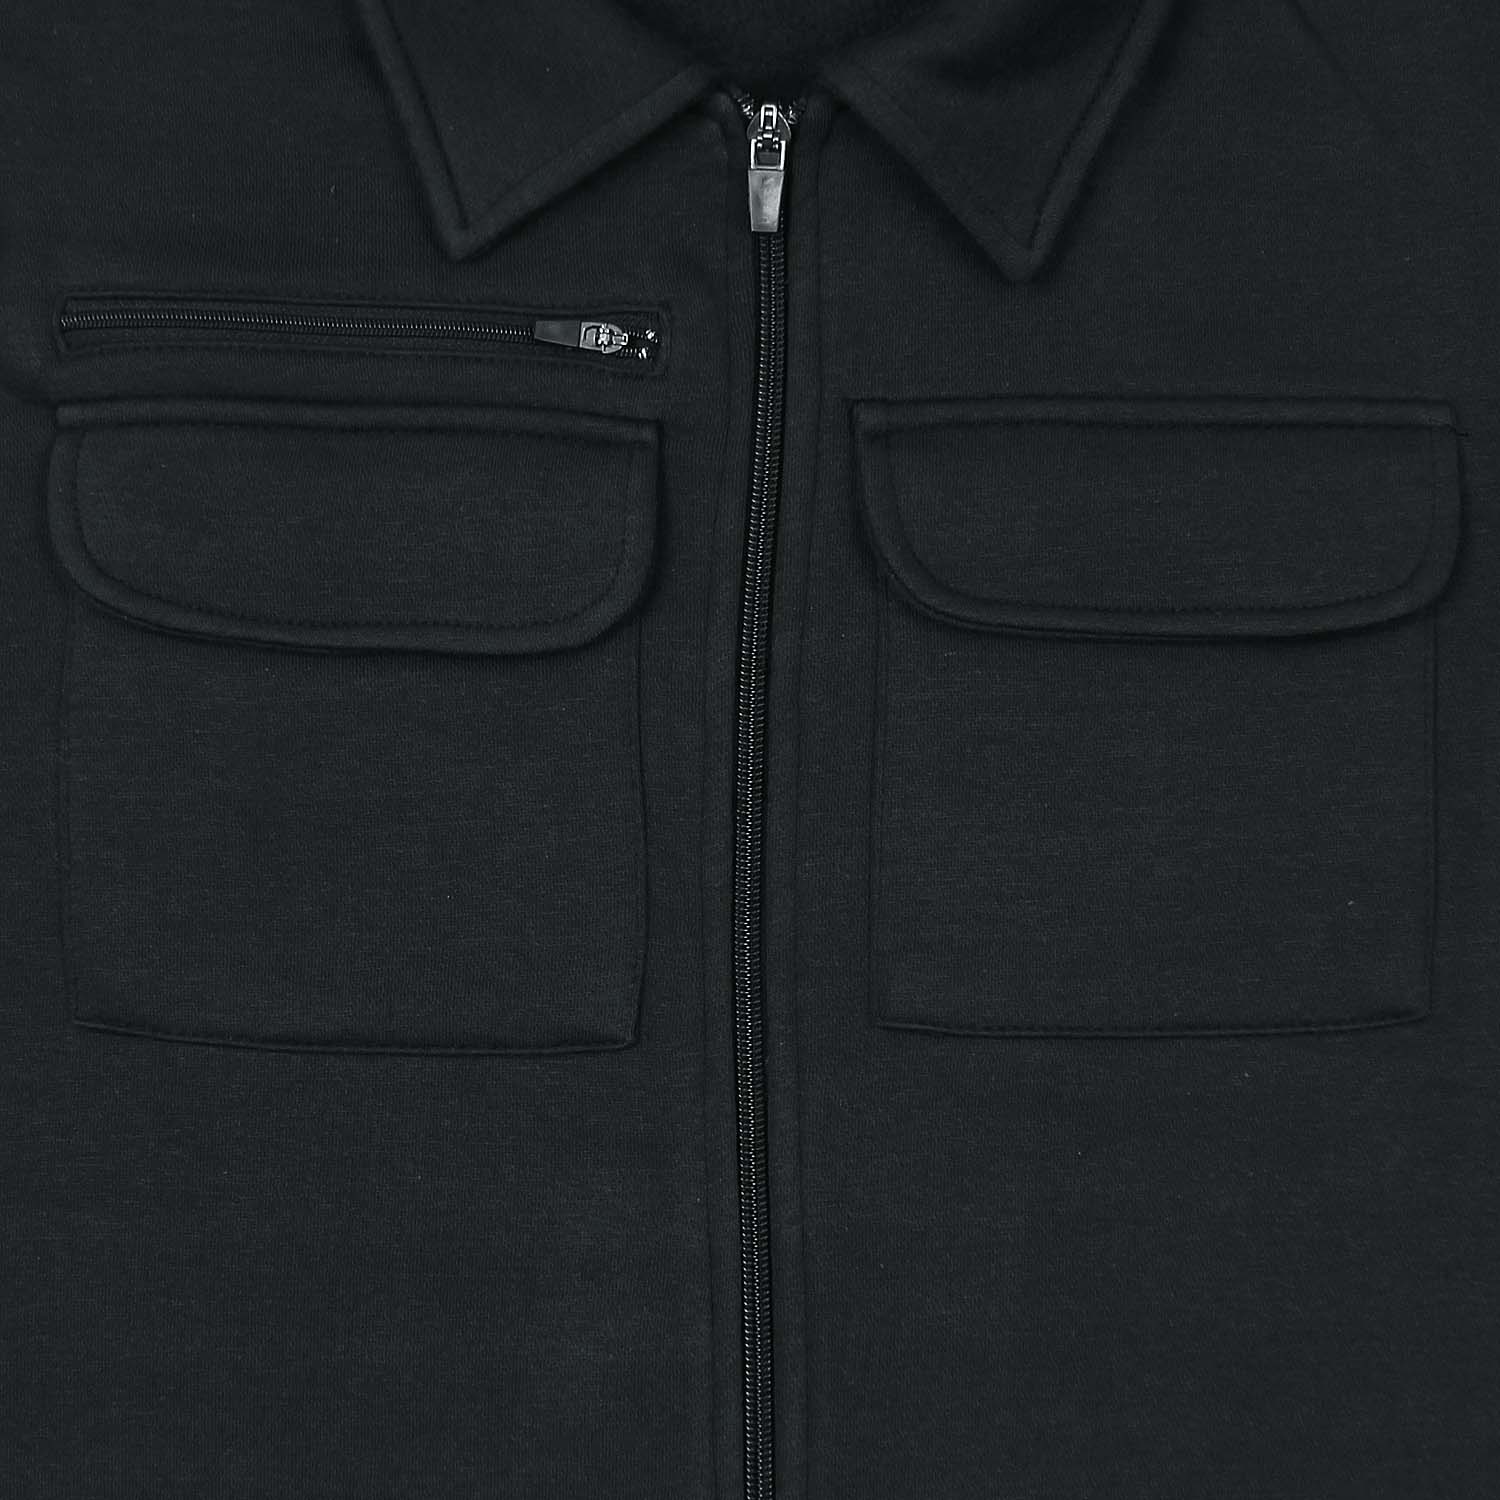 X-Fit Utility Pocket Men's  Zipper Coord set-2315-Black